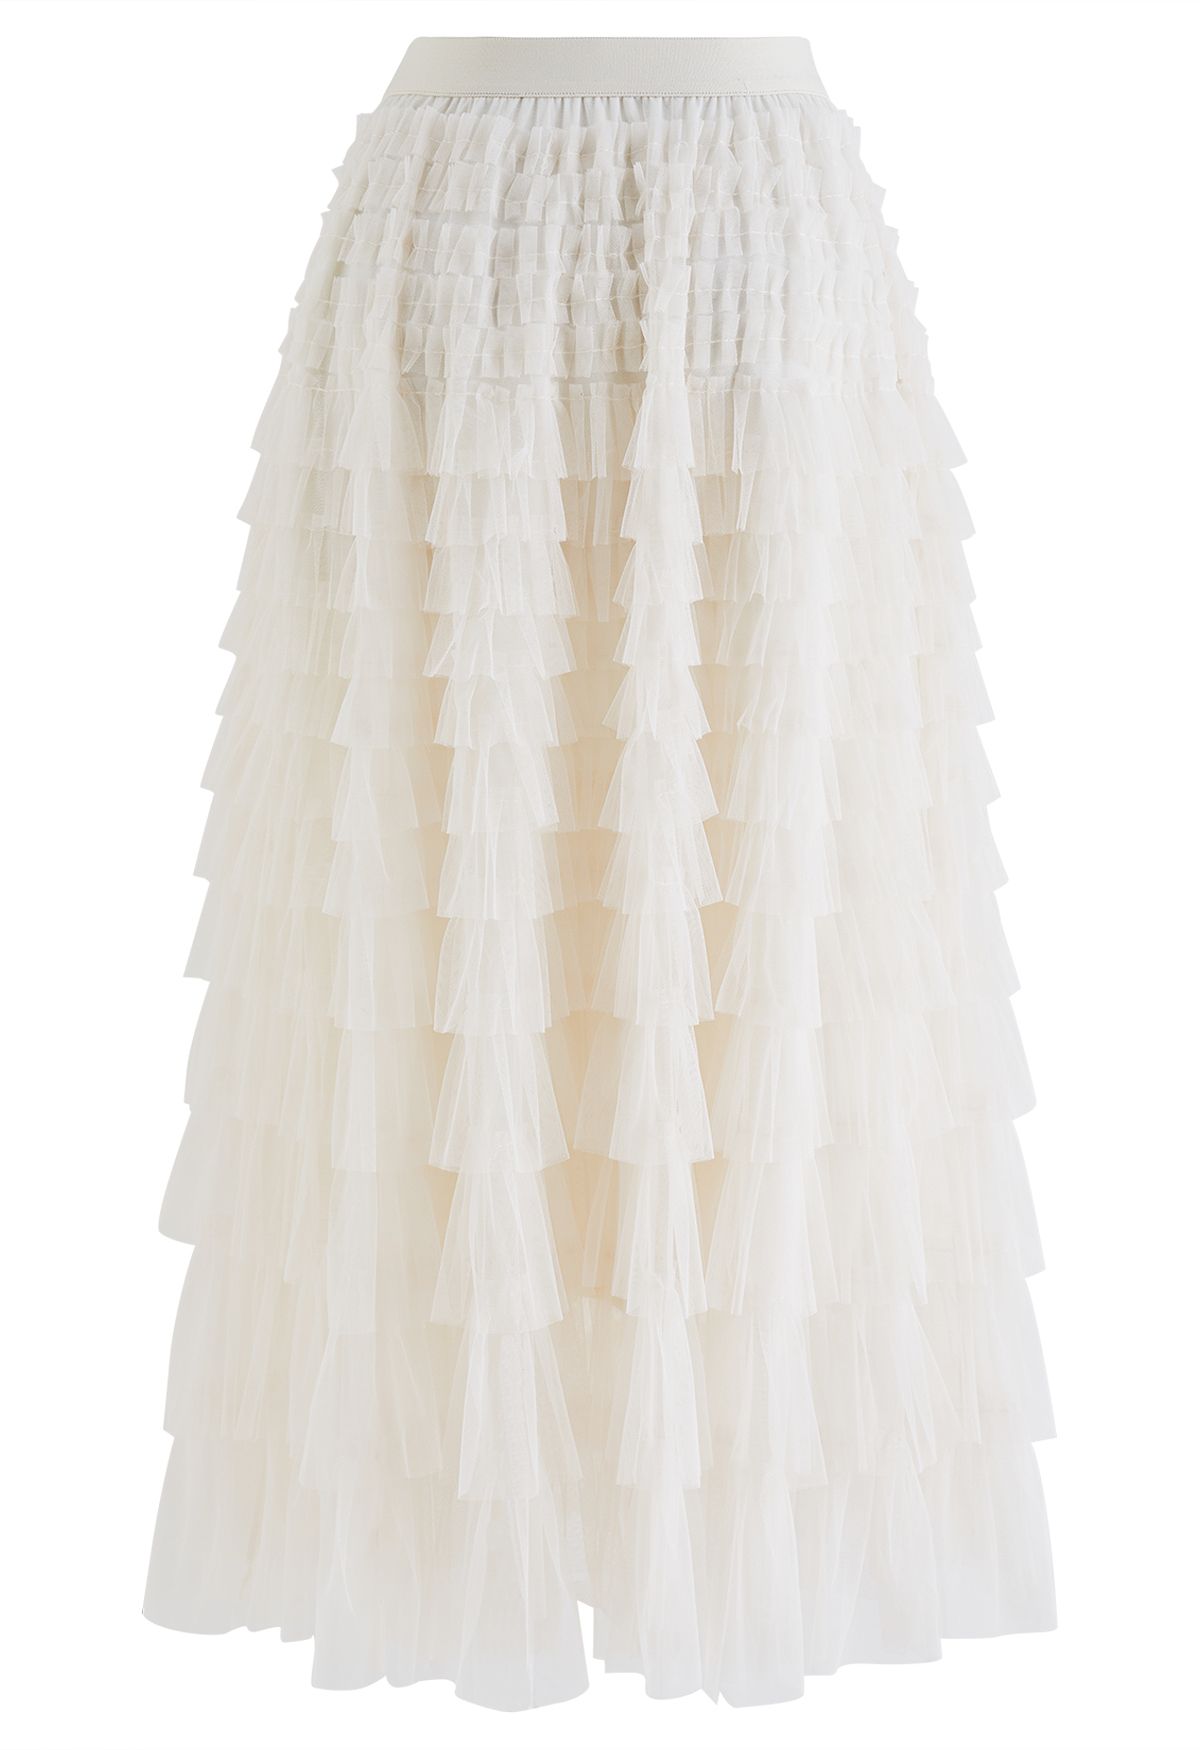 Swan Cloud Midi Skirt in Cream